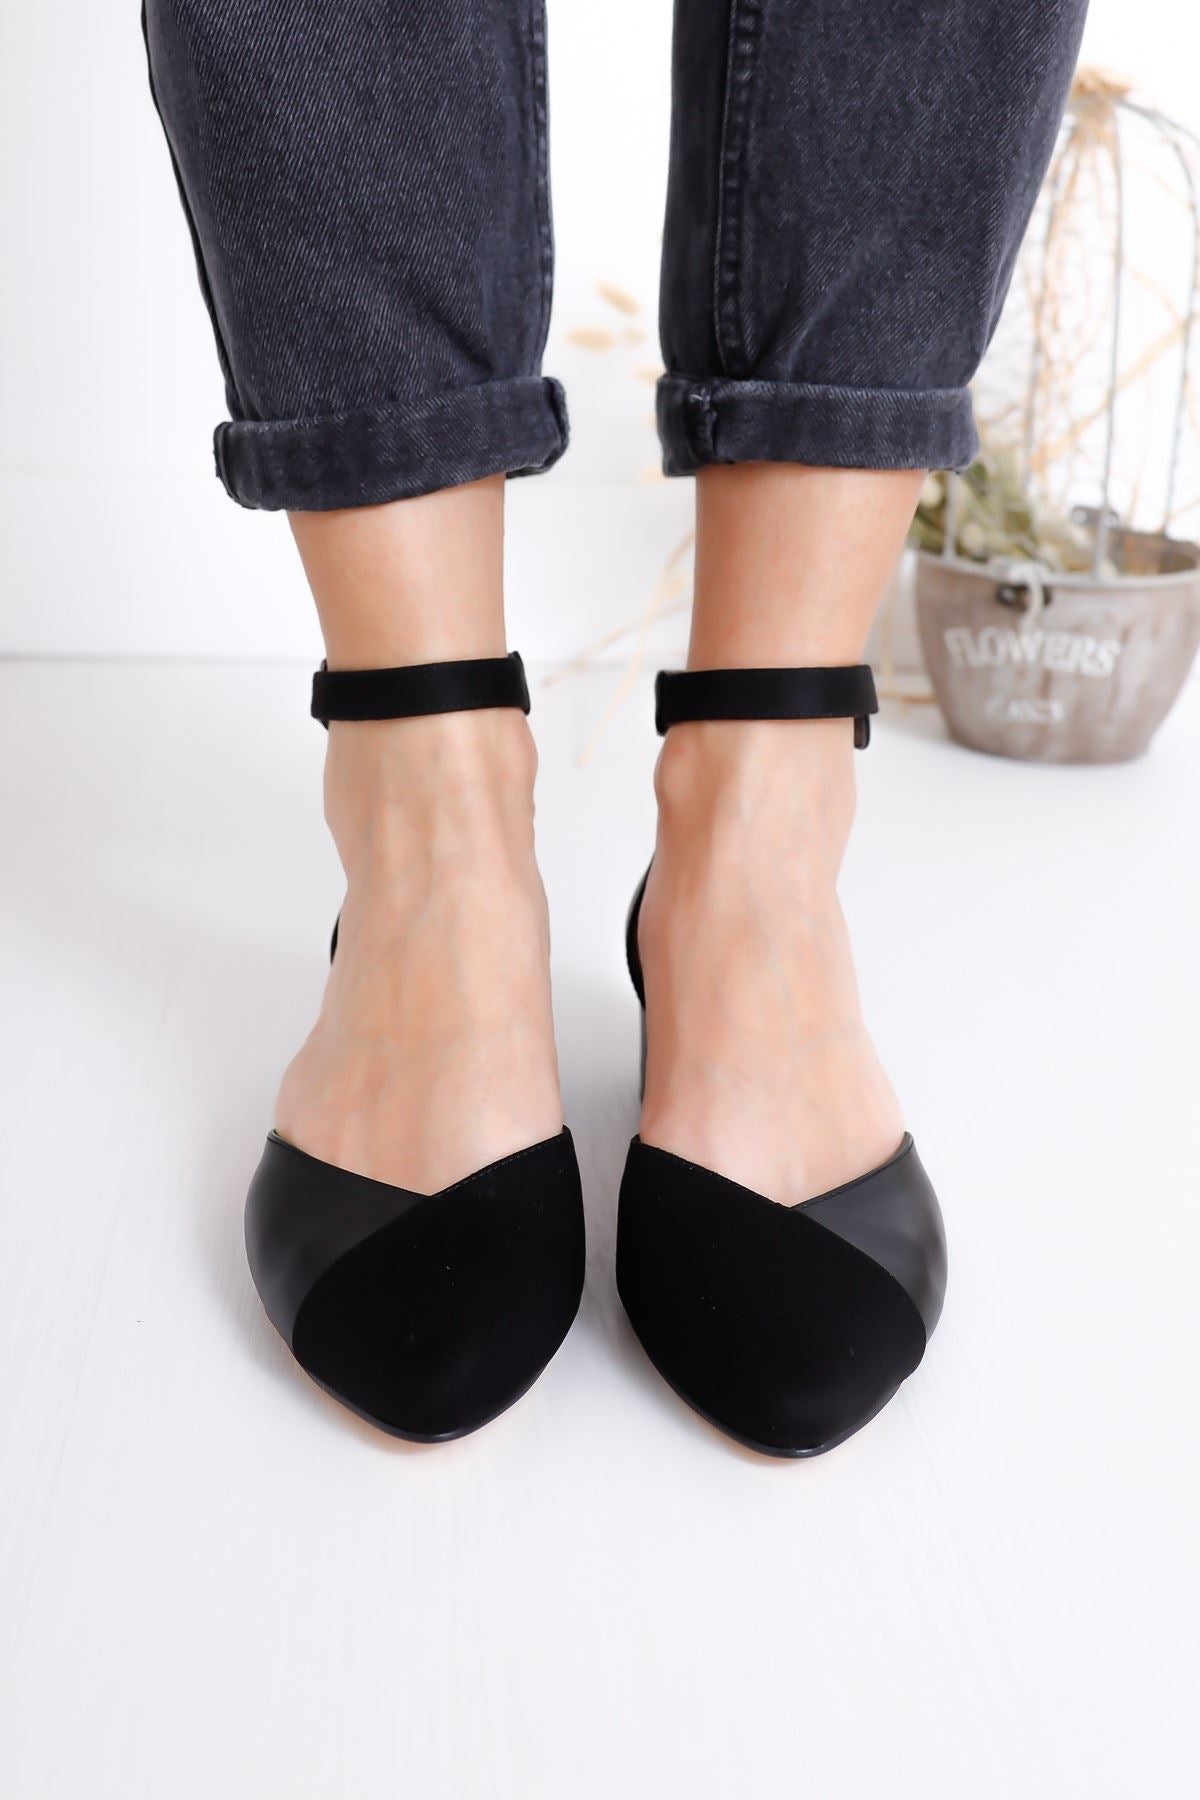 Women's Holly Heels Black Skin-Suede Shoes - STREETMODE ™